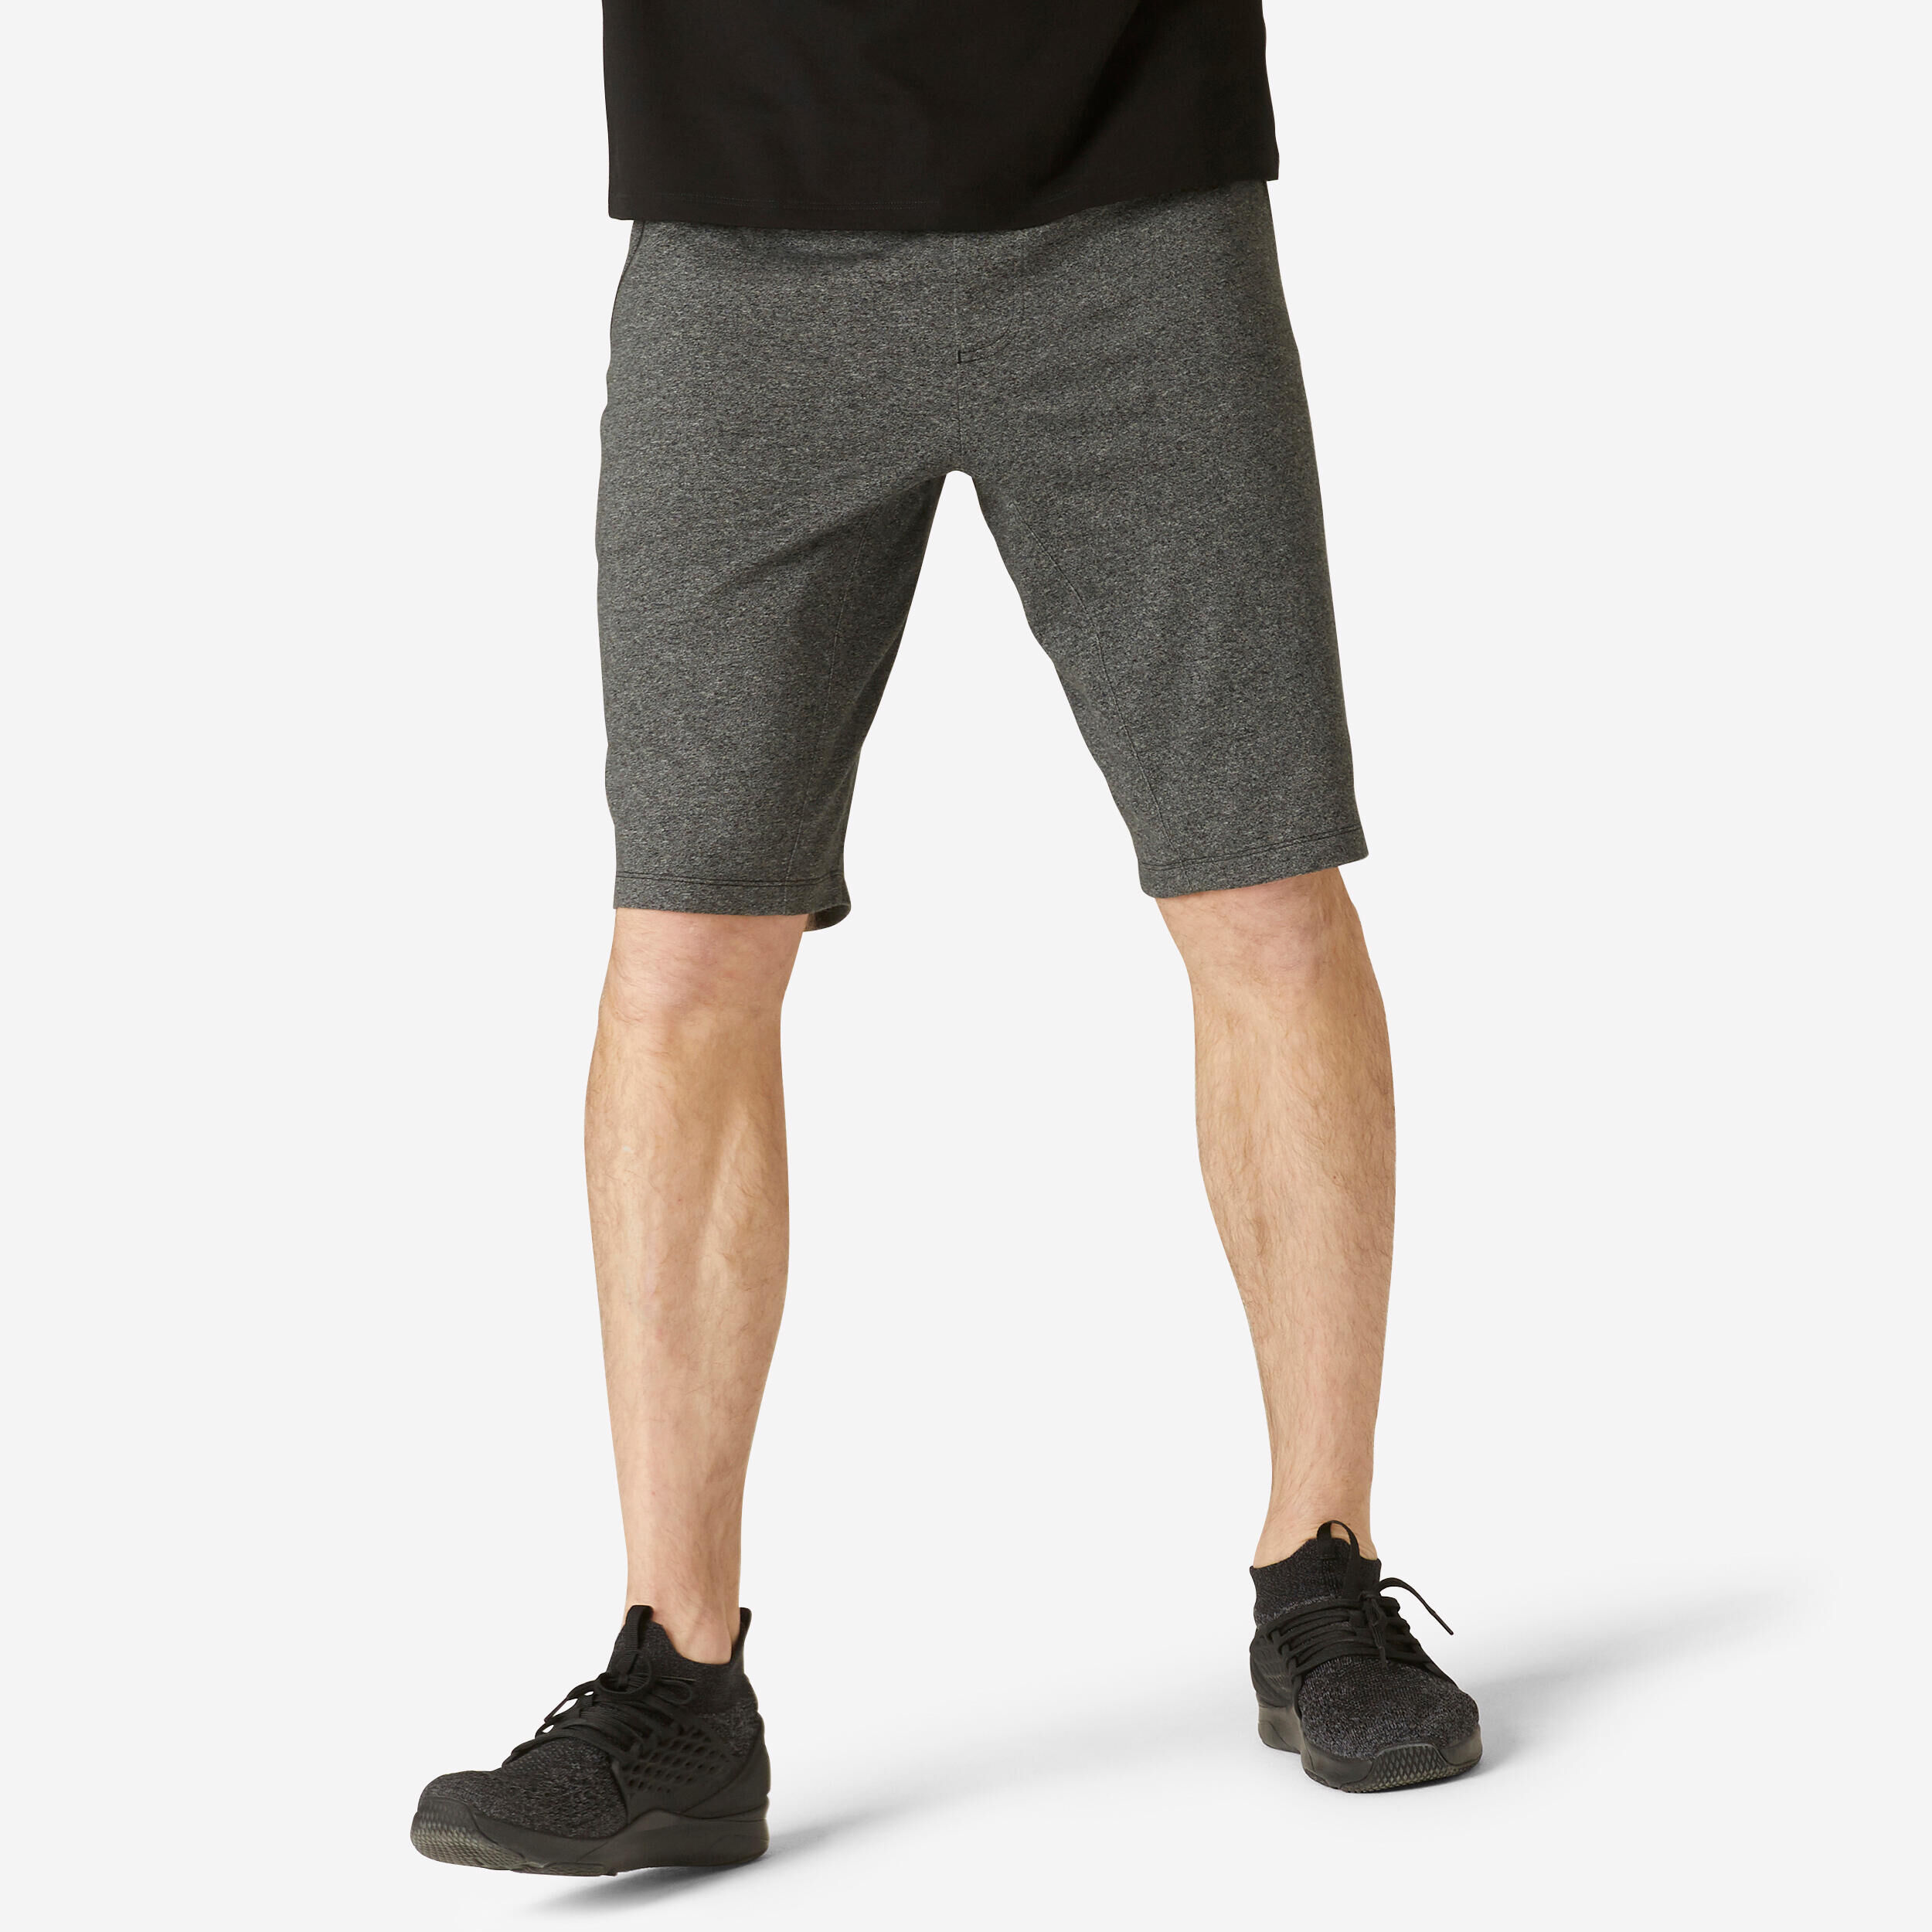 DOMYOS Men's Fitness Shorts 500 - Dark Grey